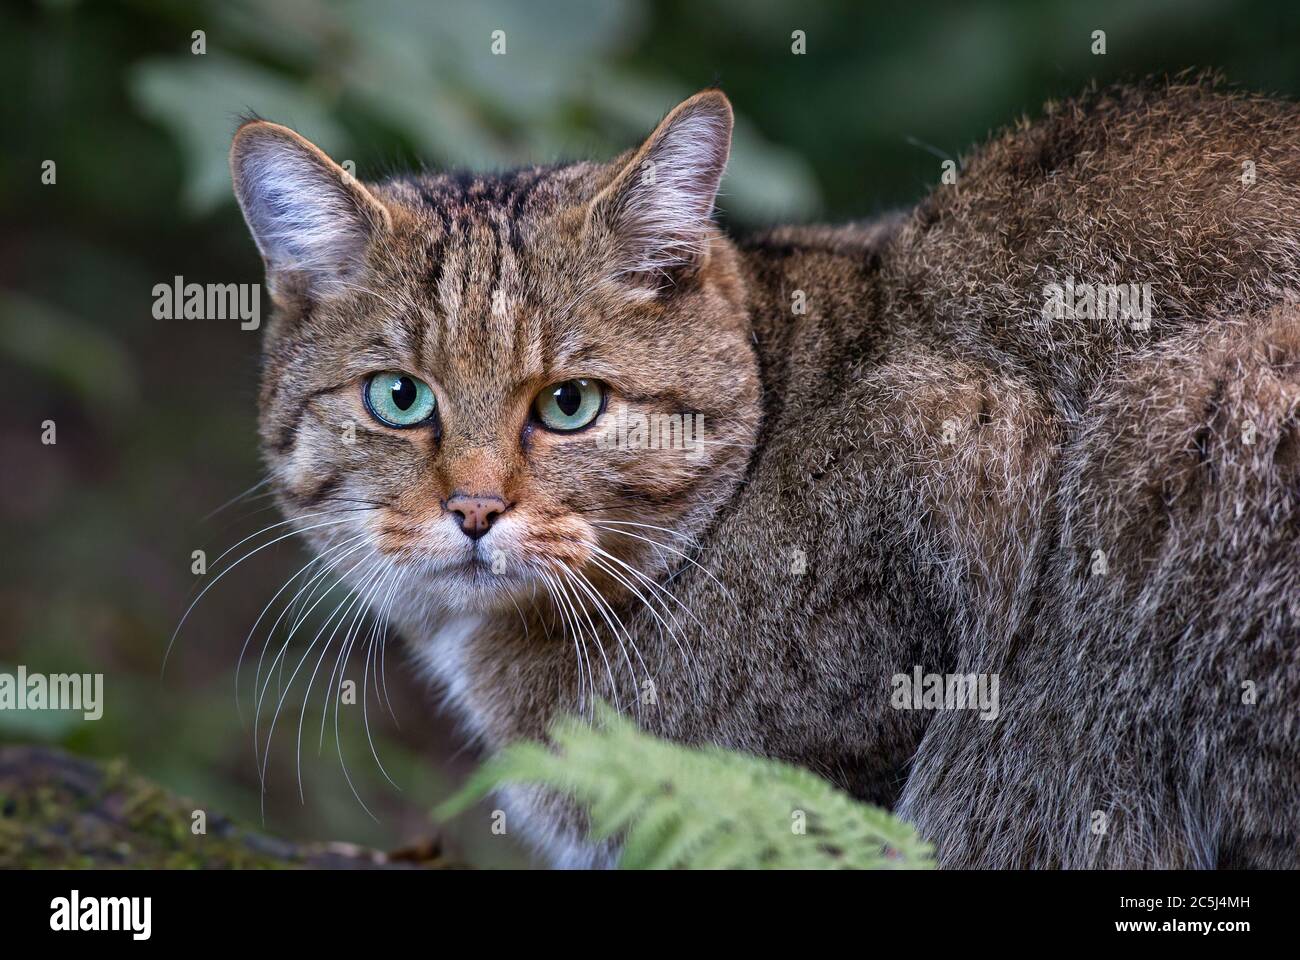 Wildcat - Felis silvestris, bellissimo gatto selvatico raro dalle foreste europee, Svizzera. Foto Stock